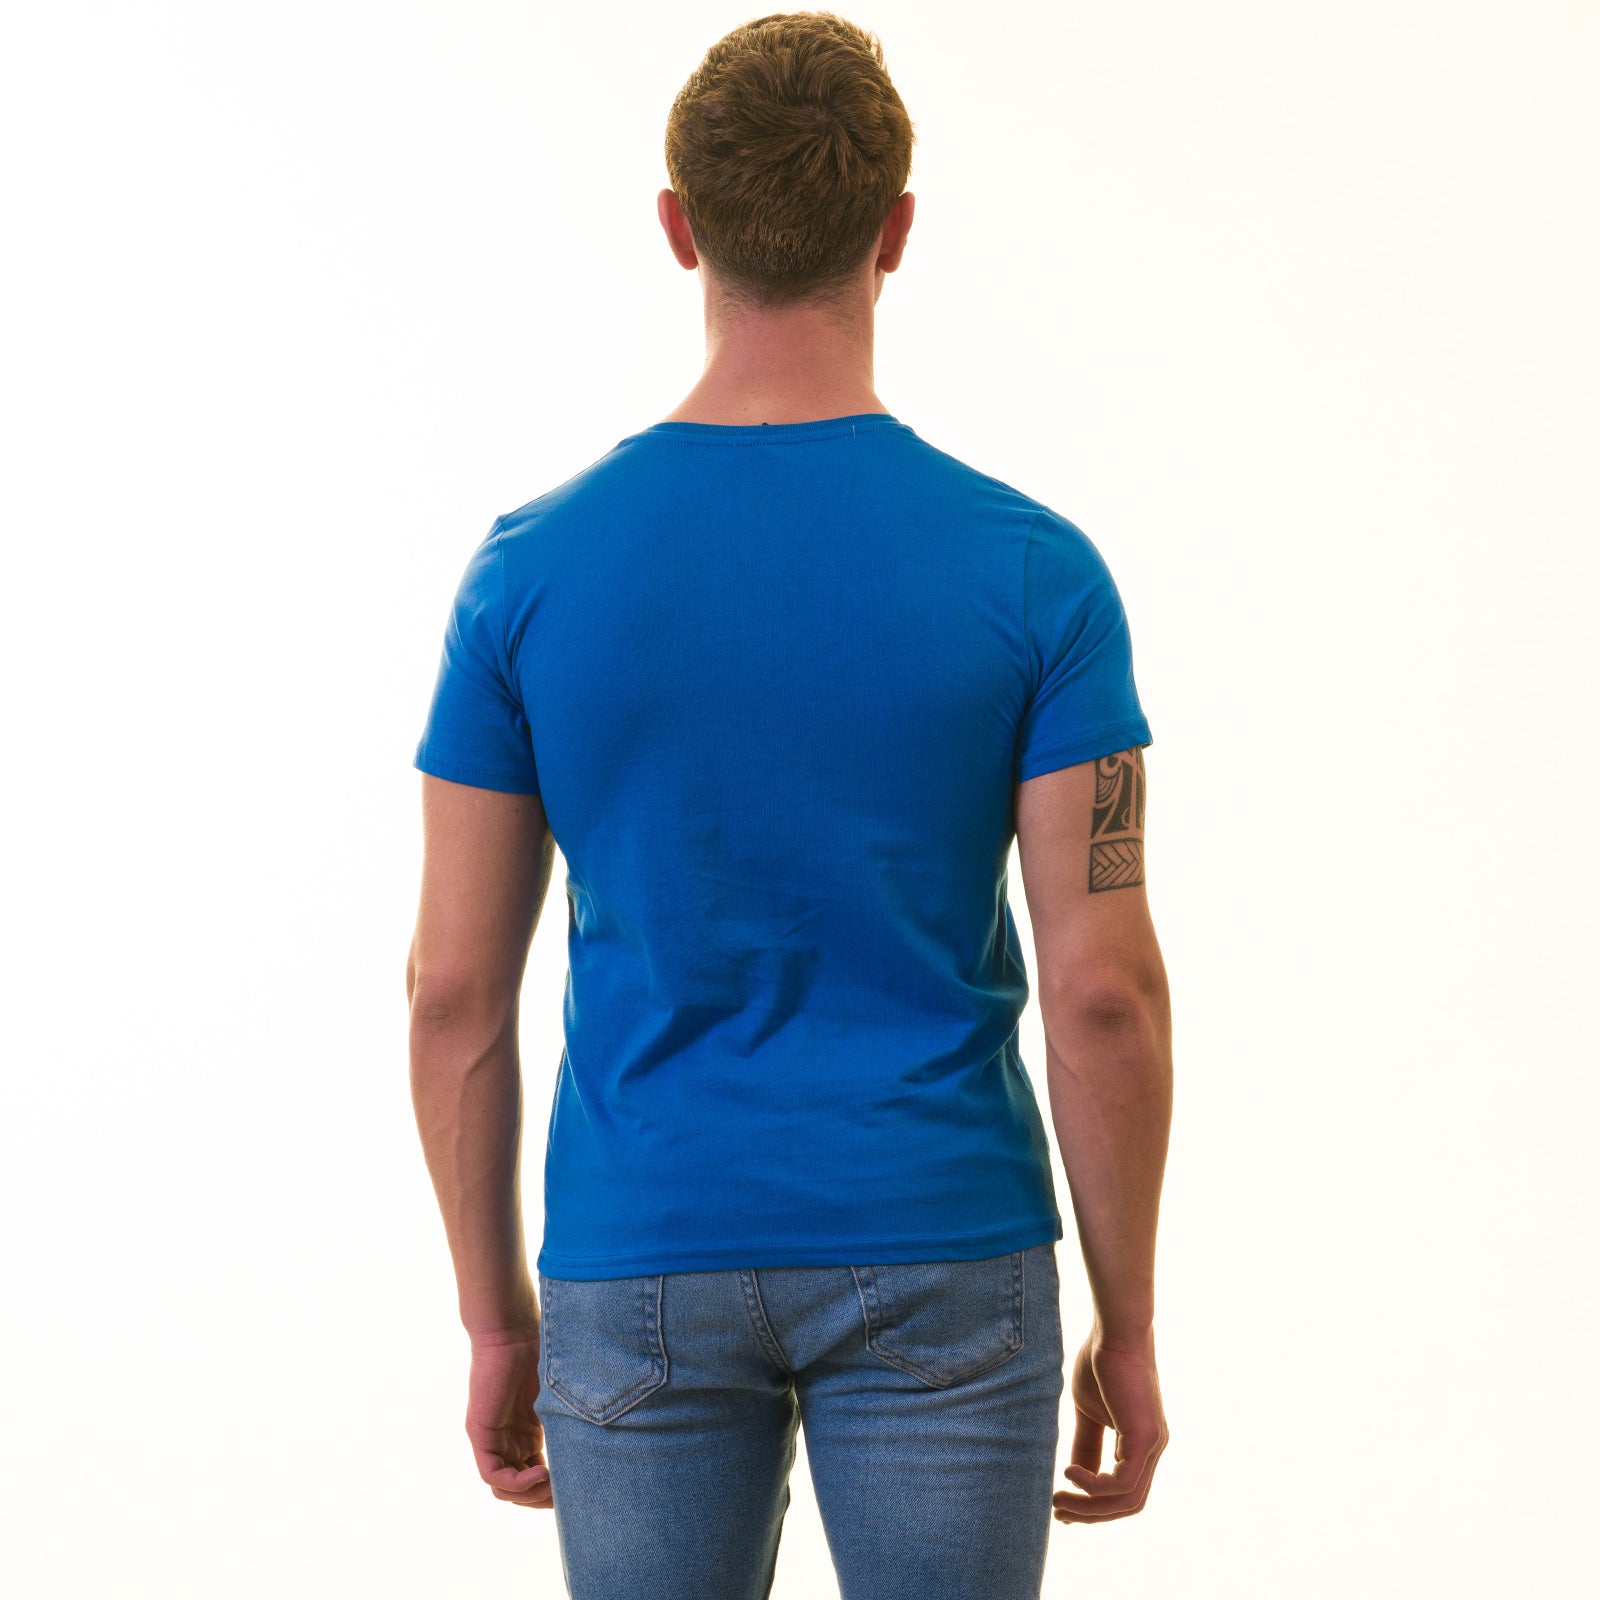 Blue European Made & Designed Premium Quality T-Shirt - Crew Neck Short Sleeve T-Shirts